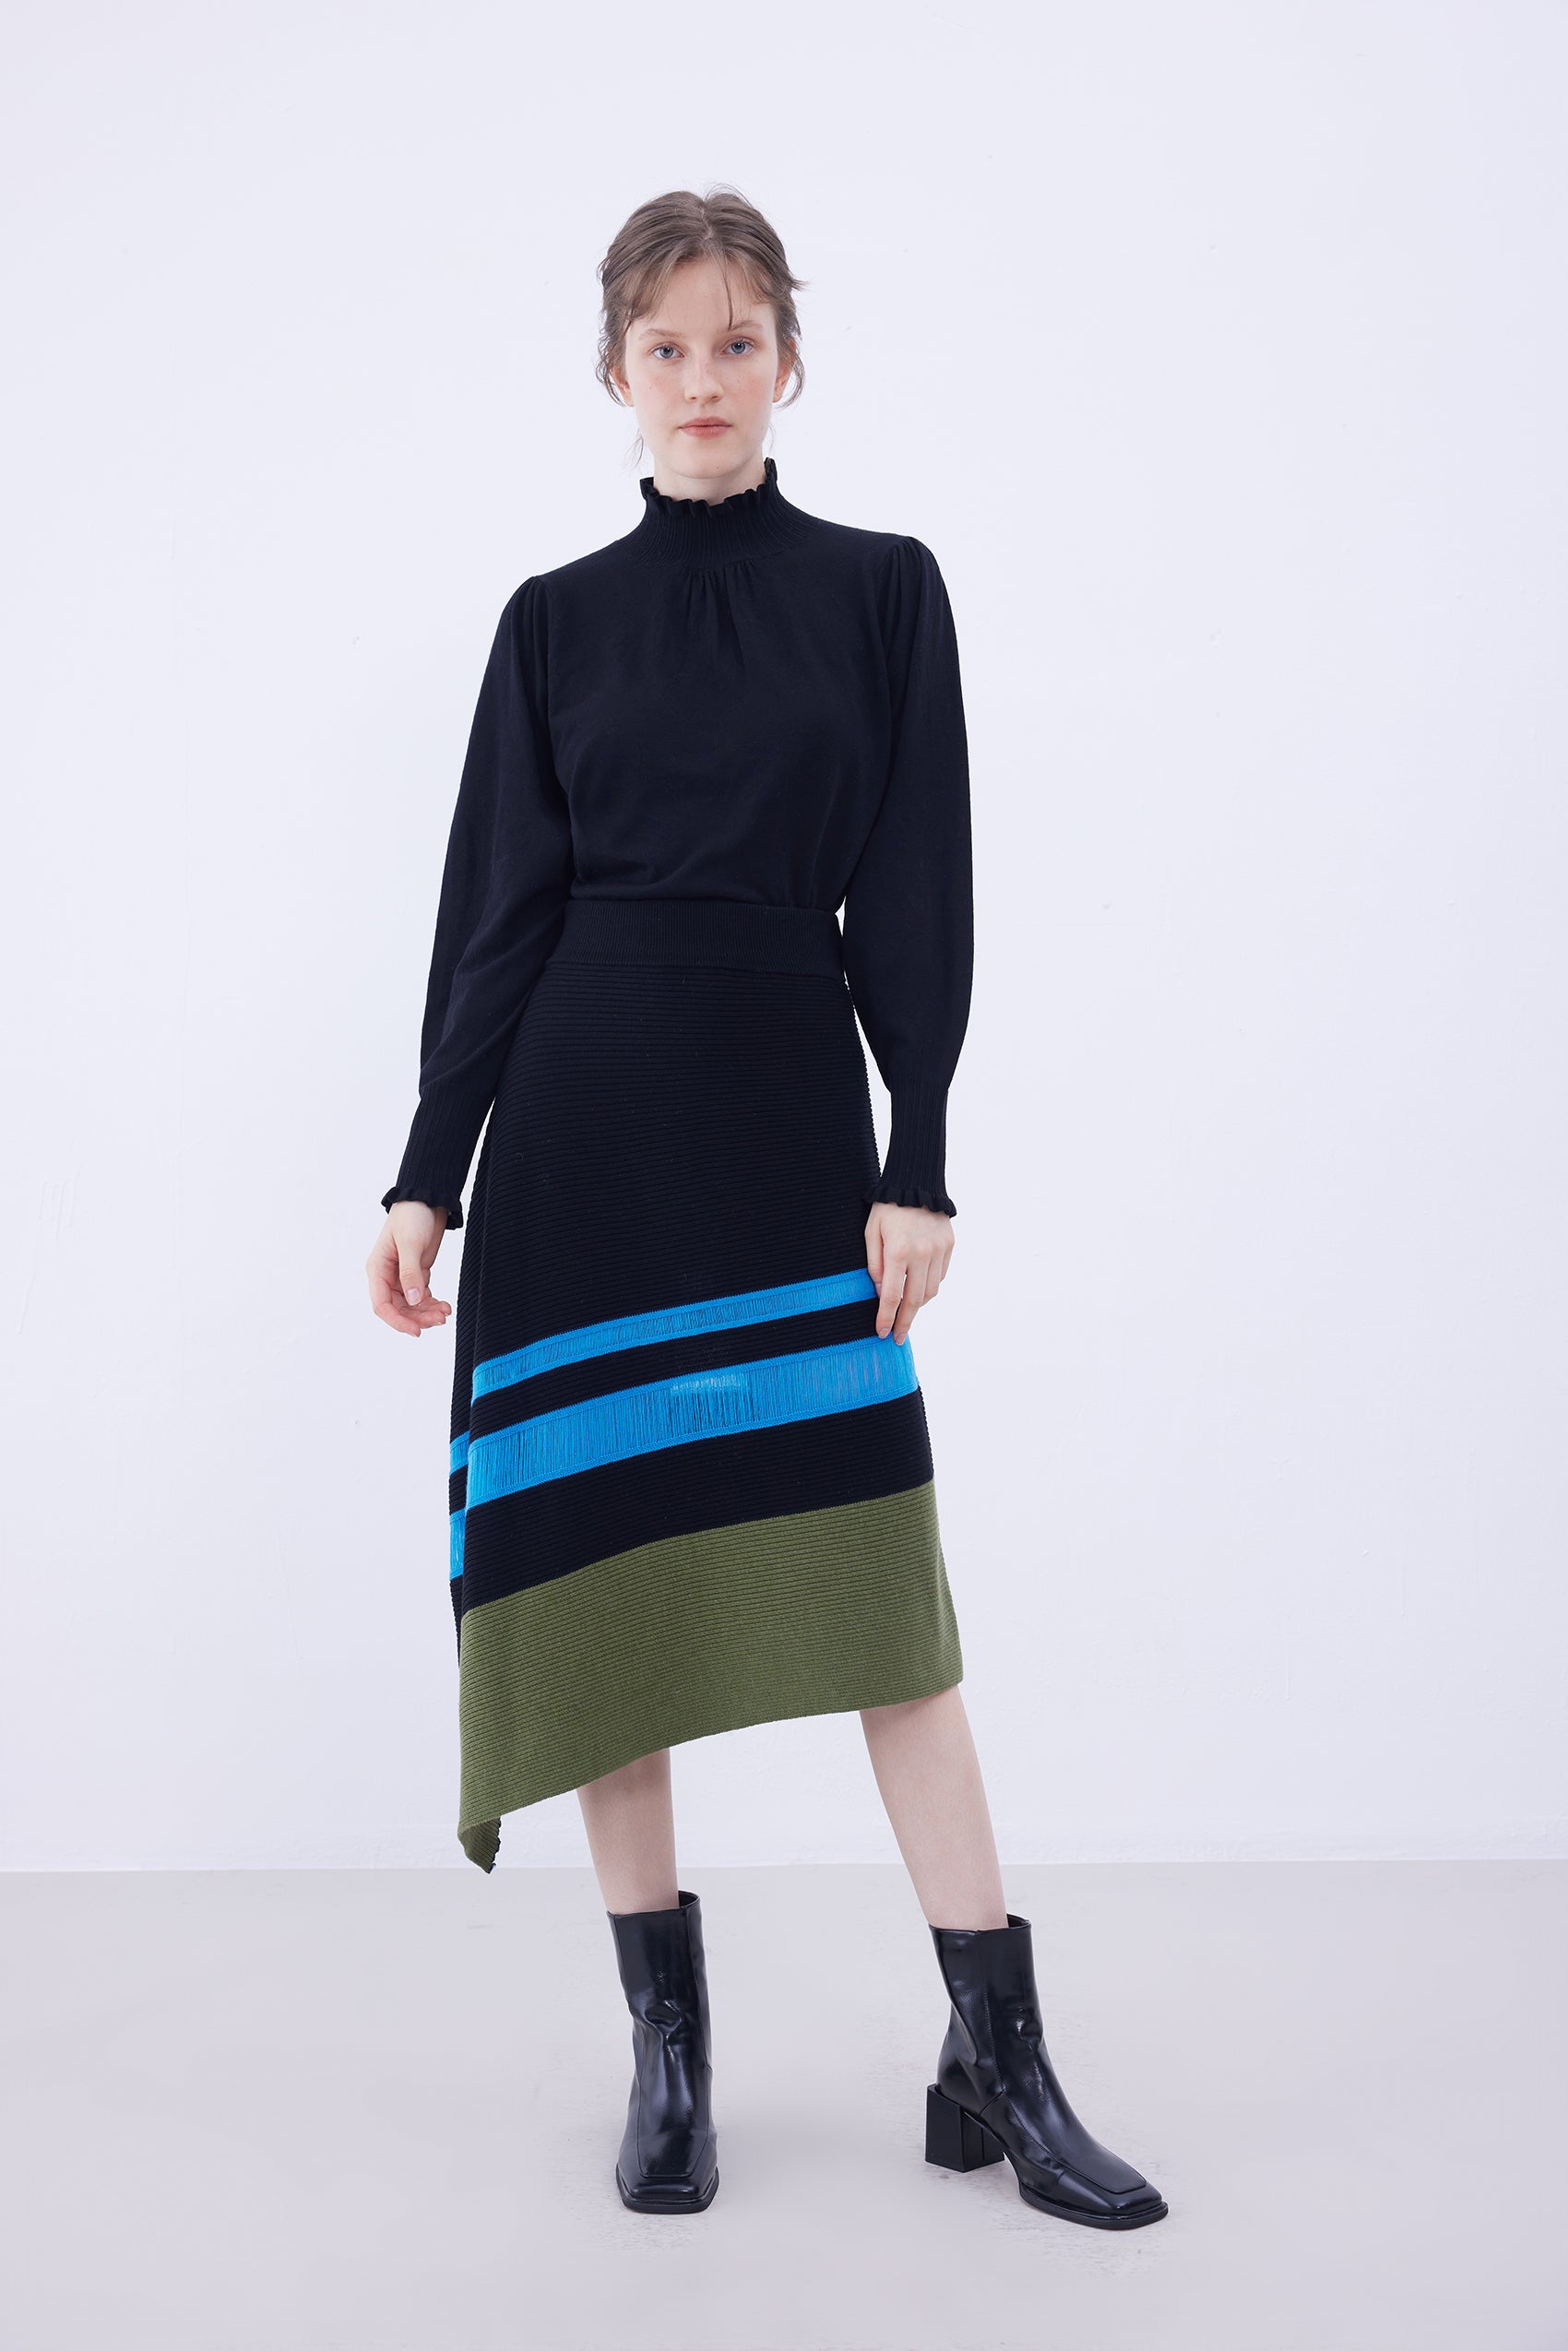 Asymmetrical skirt